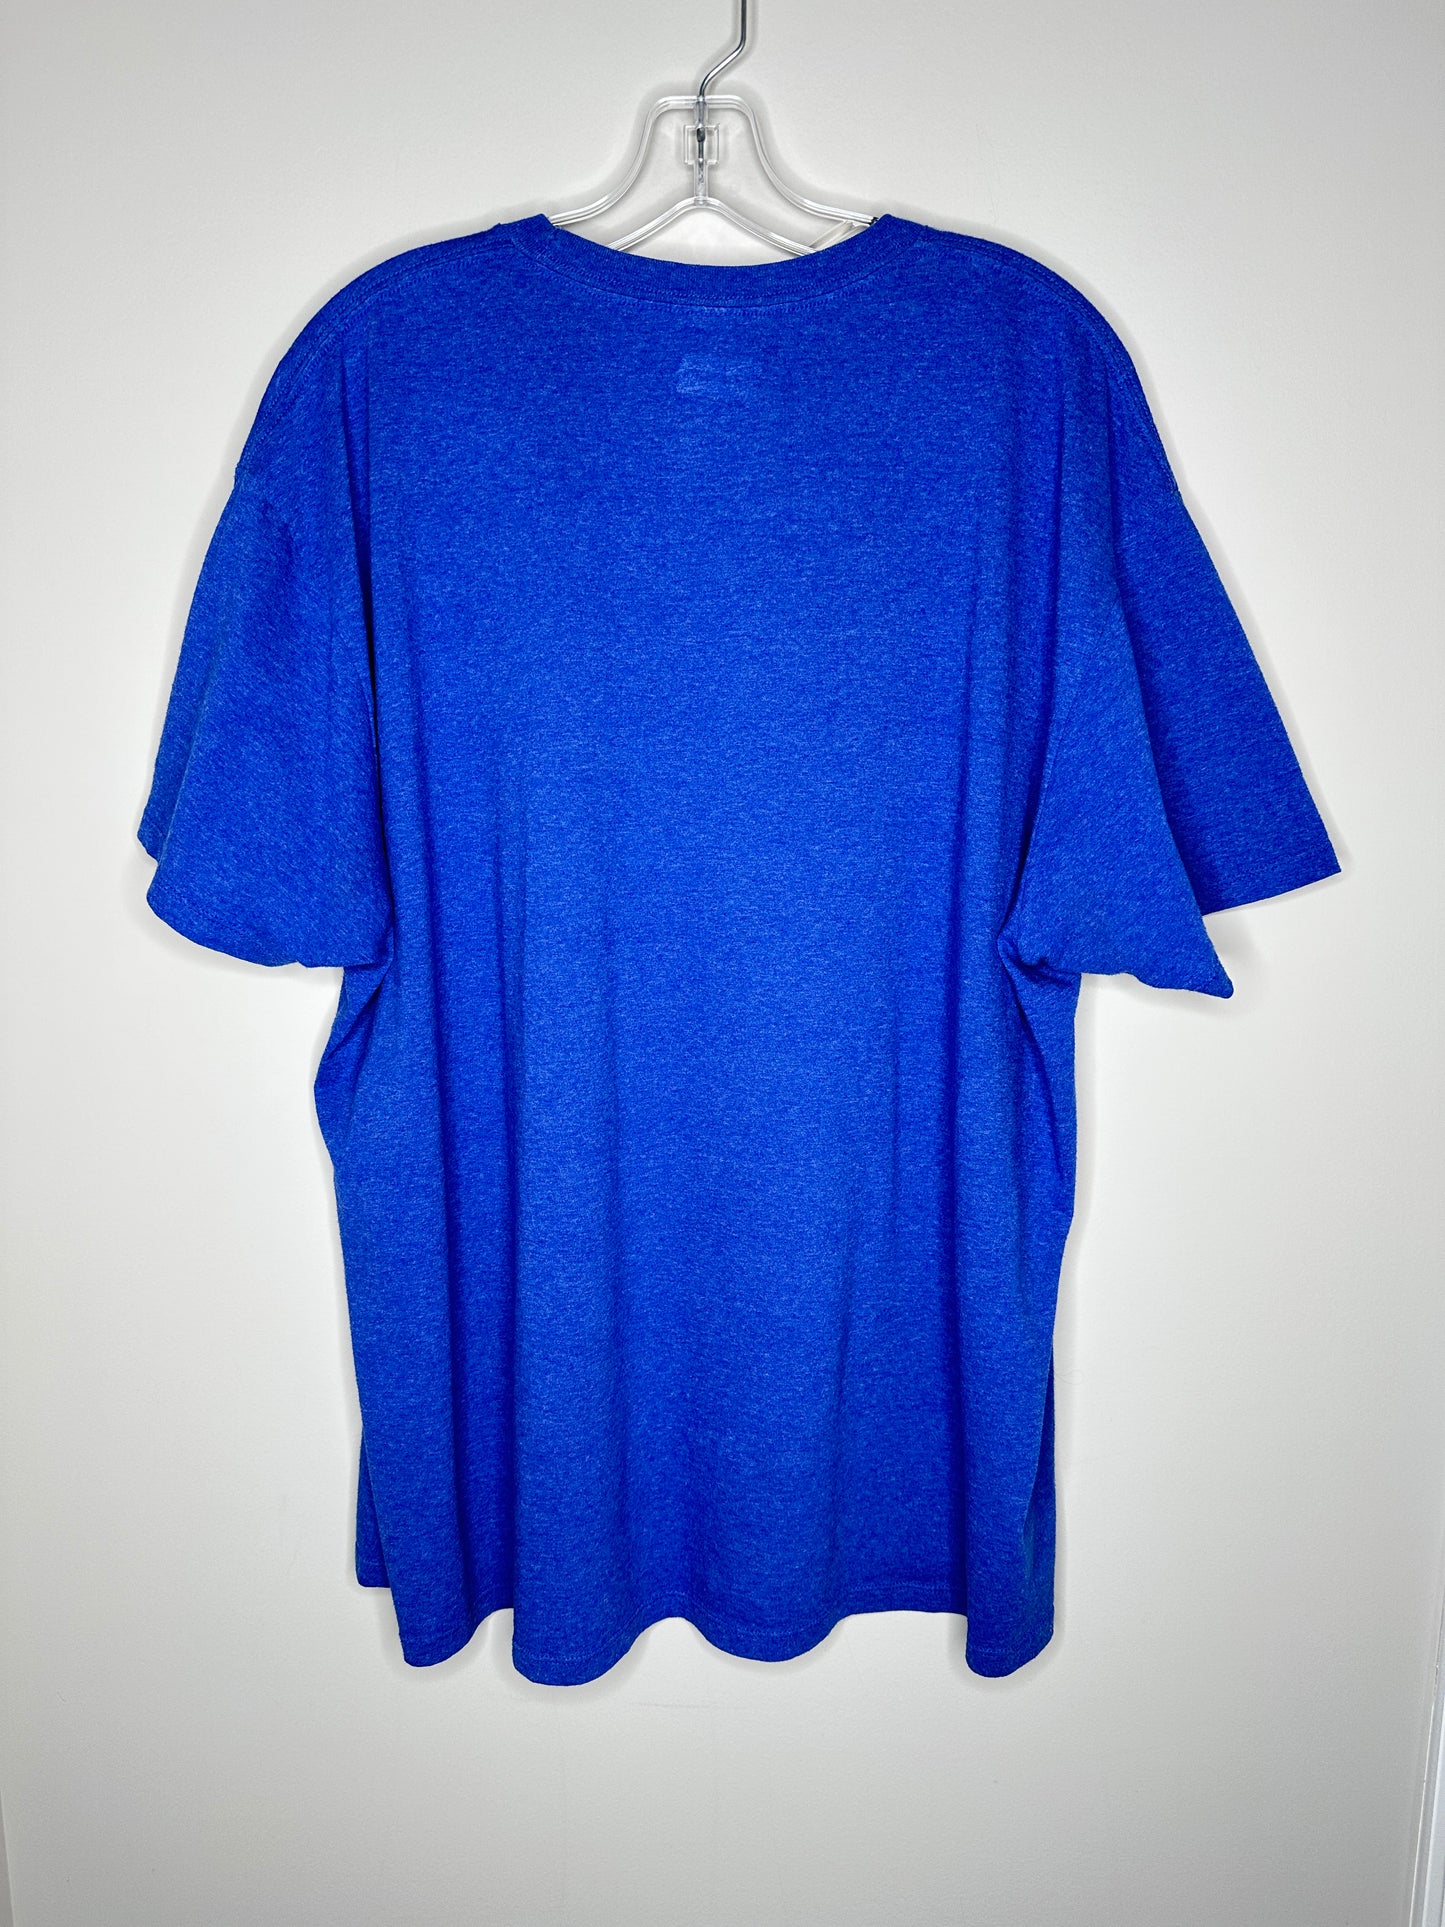 Blockbuster Men's Size XXL Blue Blockbuster T-Shirt